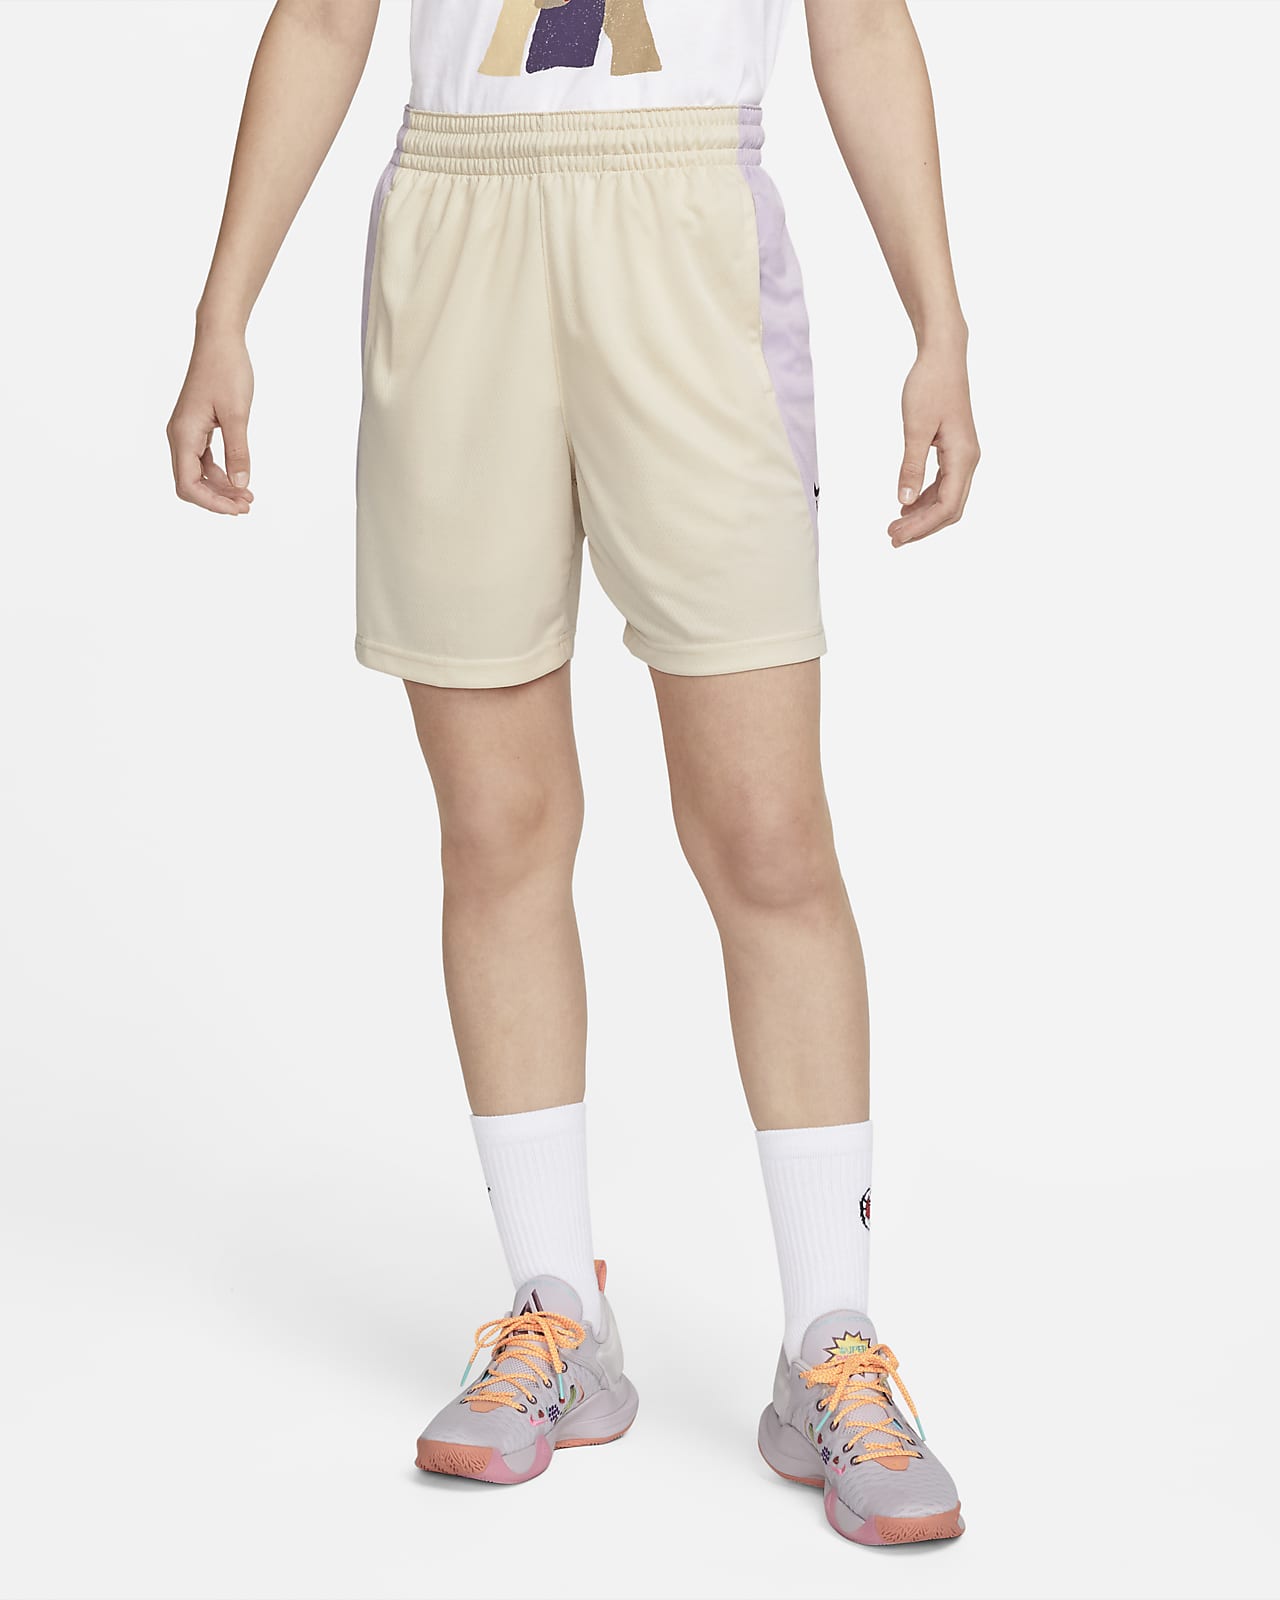 Nike Dri-FIT Fly Women's Basketball Shorts